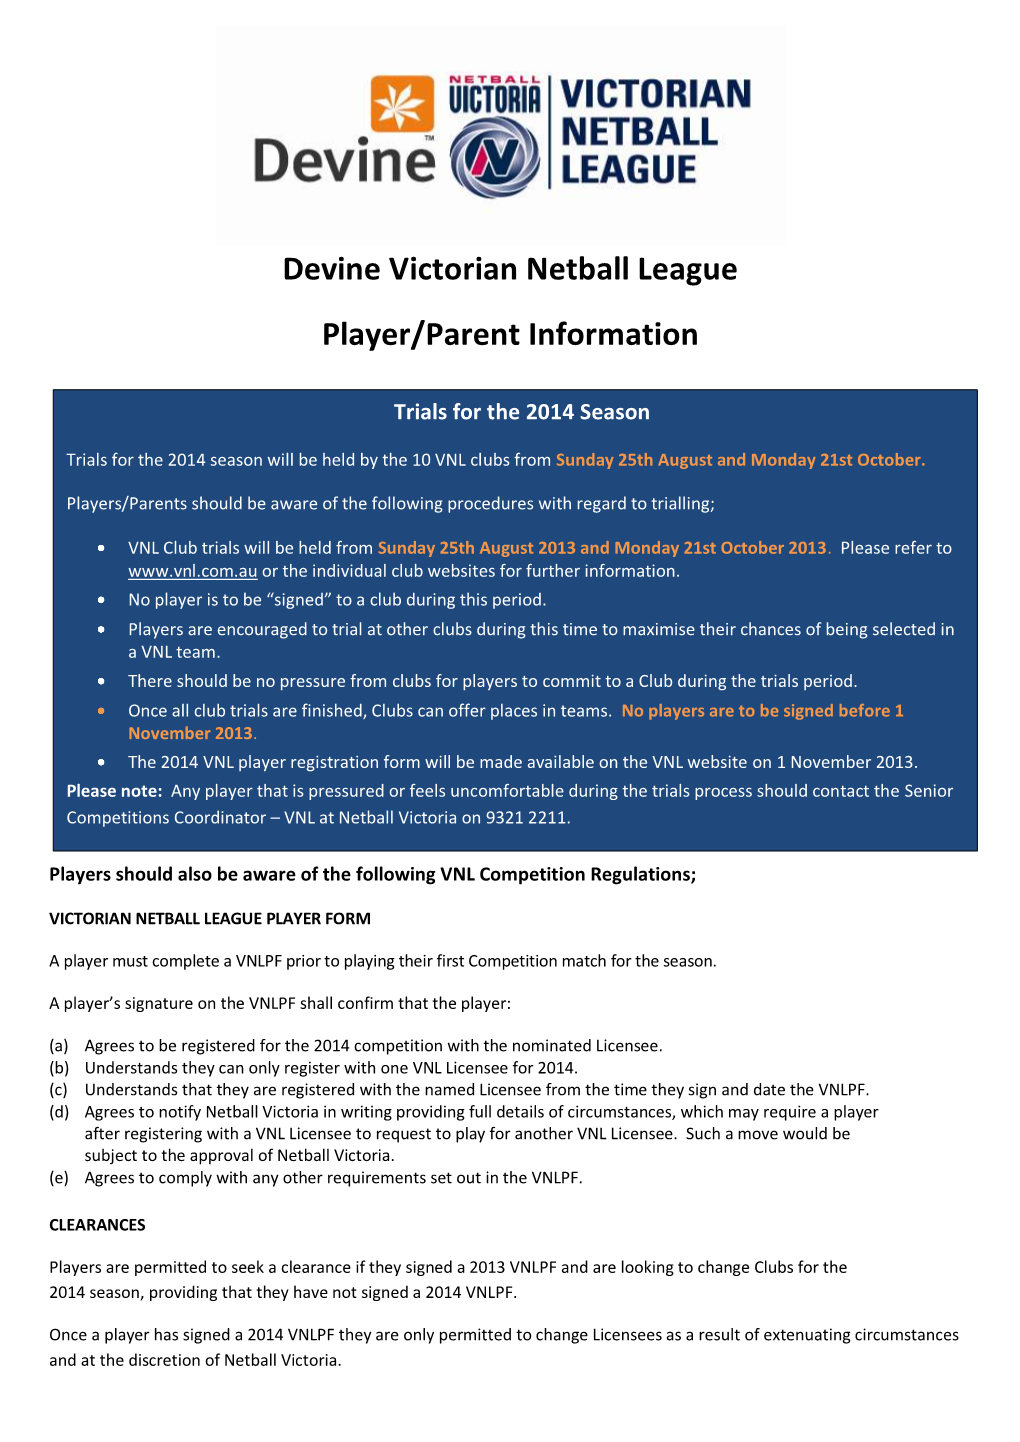 Devine Victorian Netball League Player/Parent Information